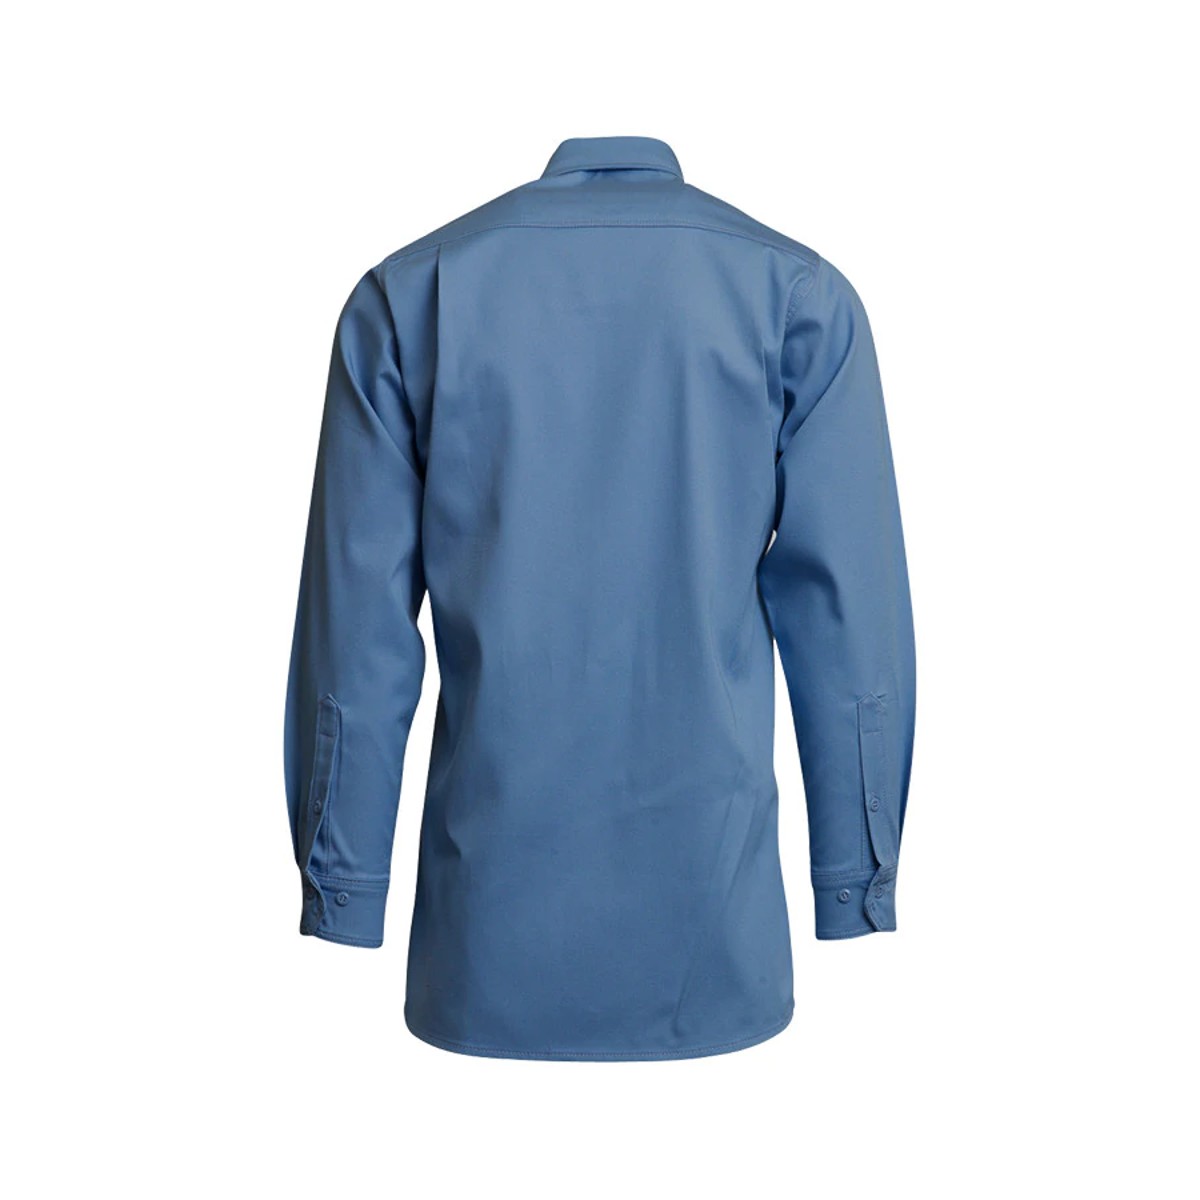 LAPCO FR Uniform Shirt in Medium Blue